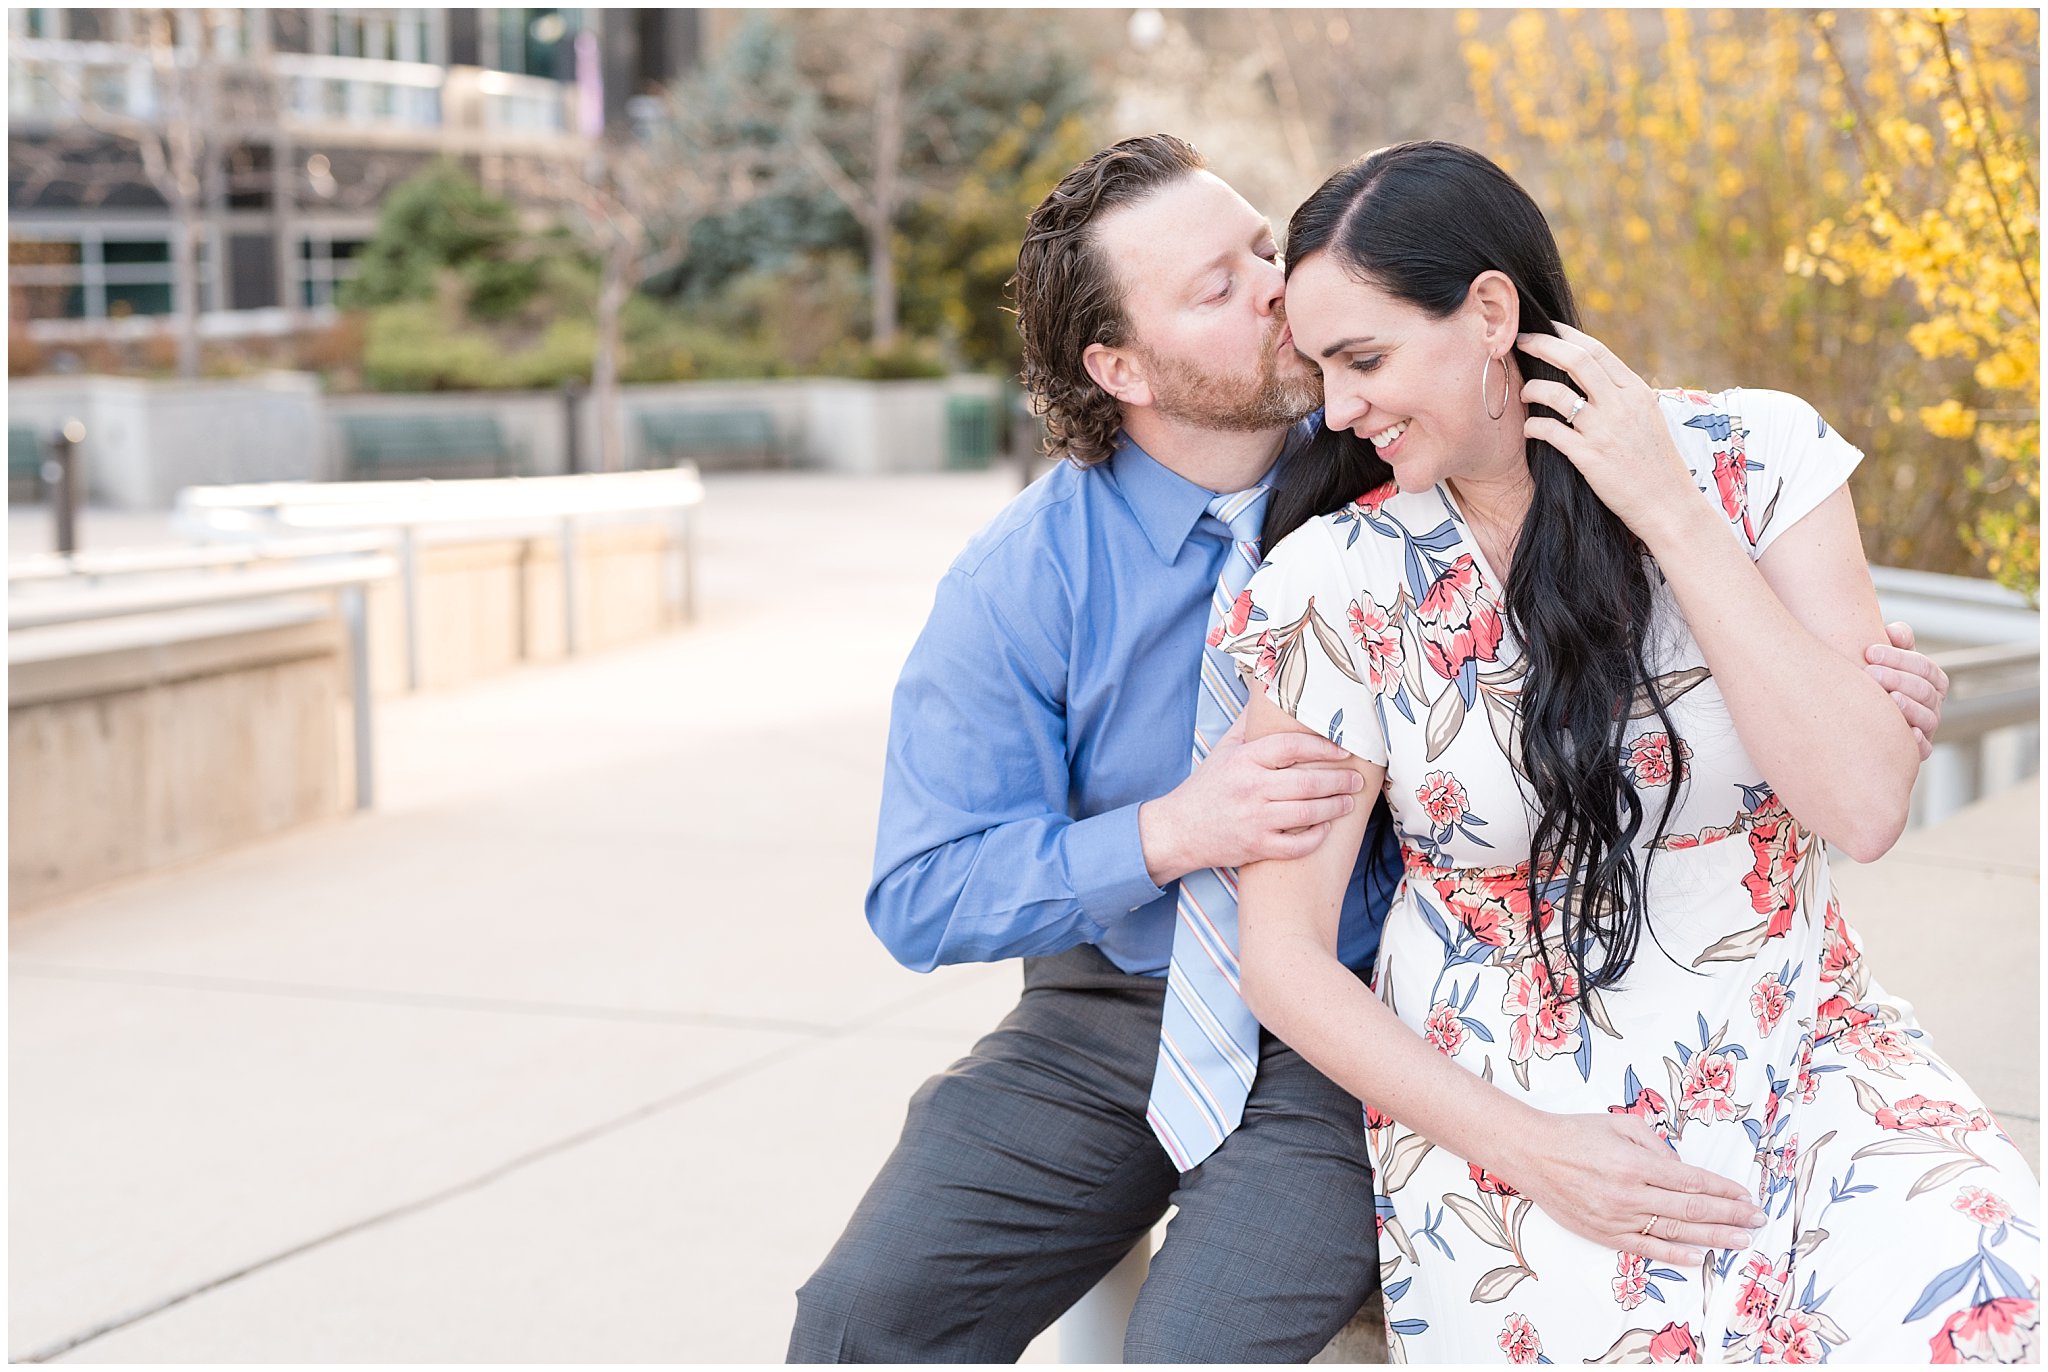 Downtown Salt Lake Engagement session | Blue shirt and tie, floral dress